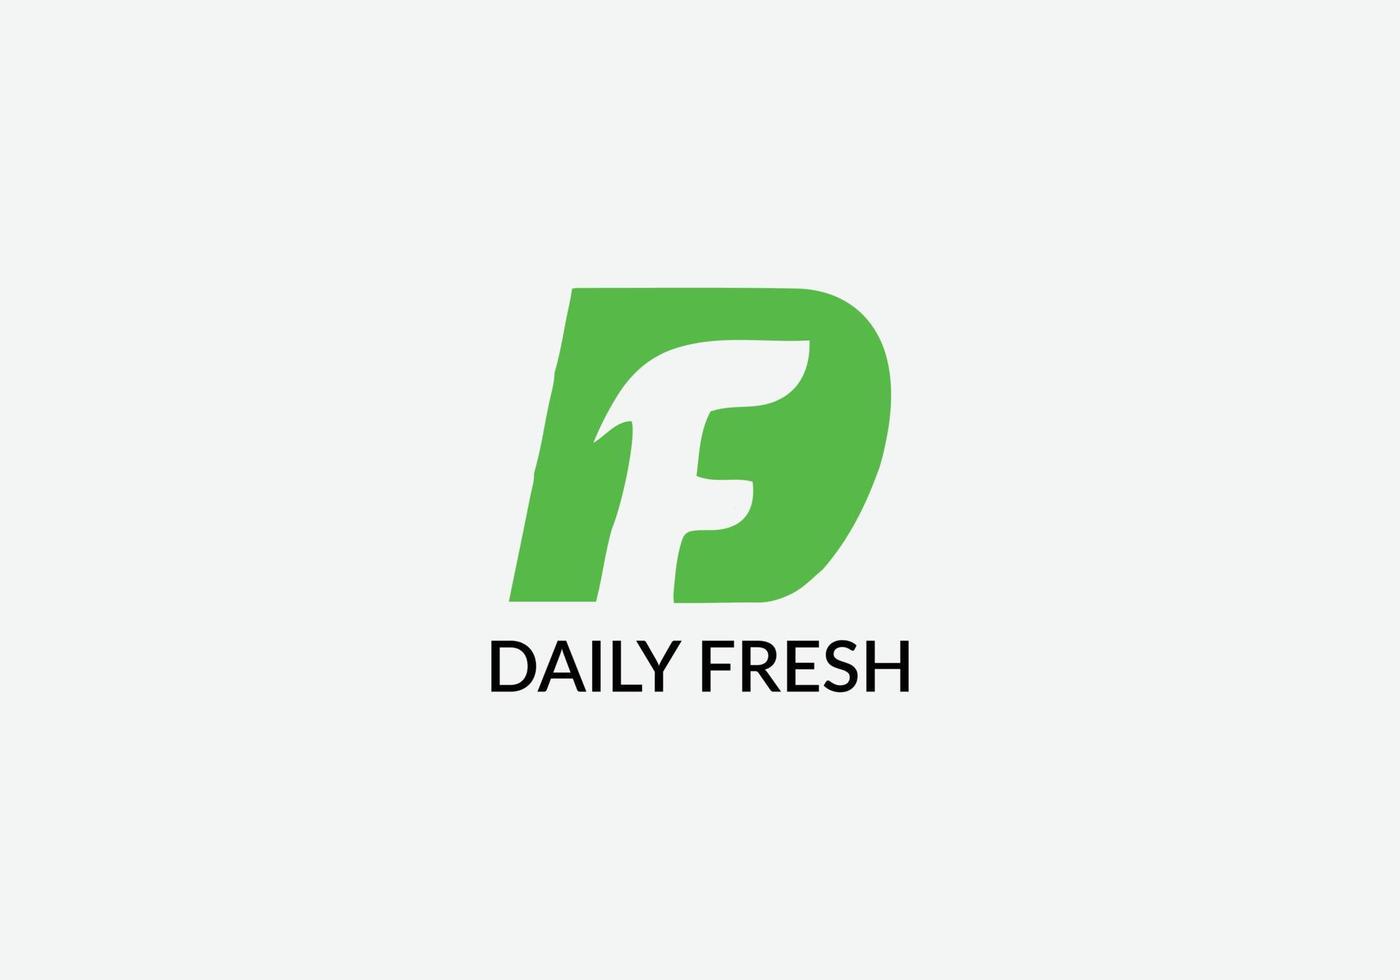 Daily Fresh Abstract df letter modern logo design vector